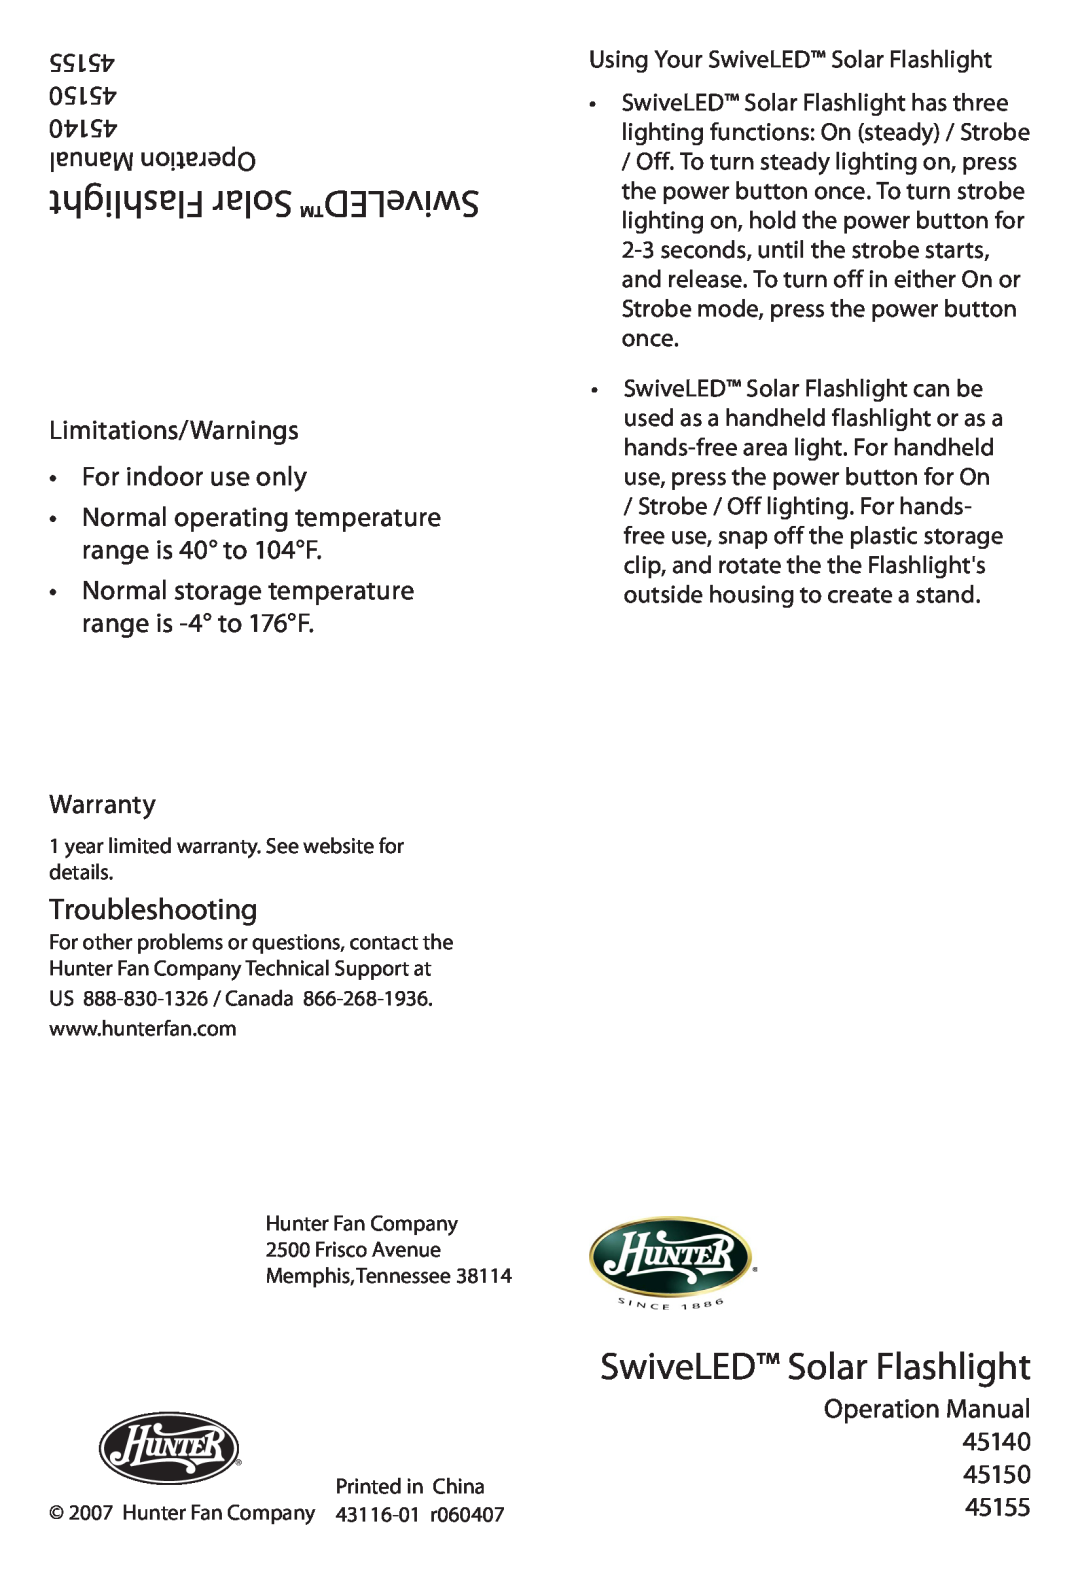 Hunter Fan warranty 45155 45150 45140 Manual Operation, Limitations/Warnings For indoor use only, Warranty 